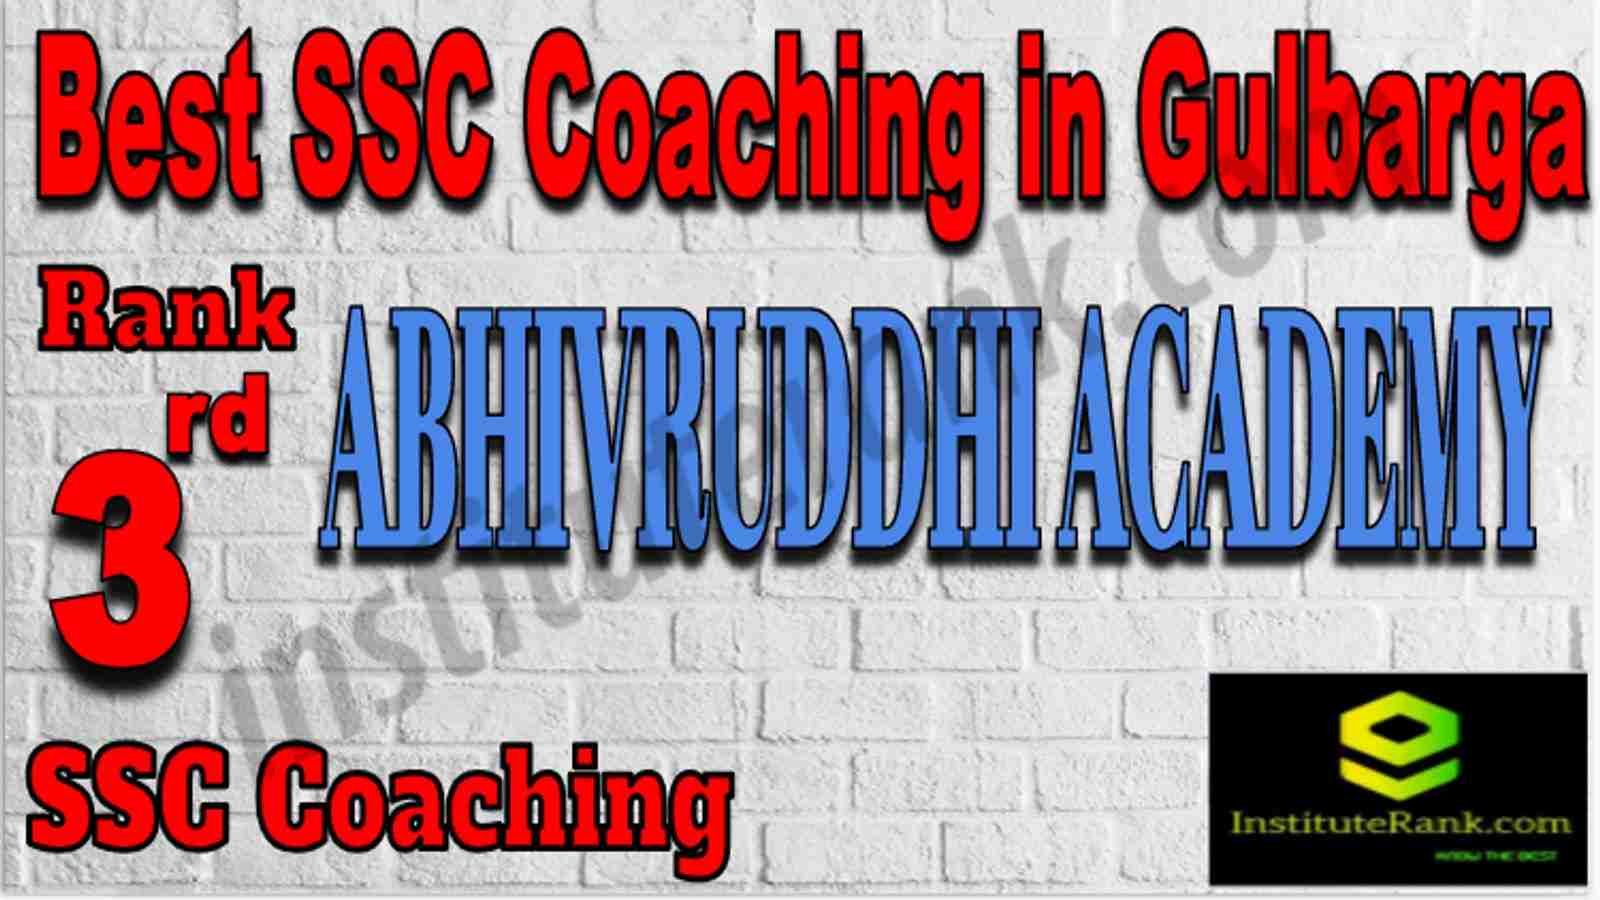 Rank 3 Best SSC Coaching in Gulbarga